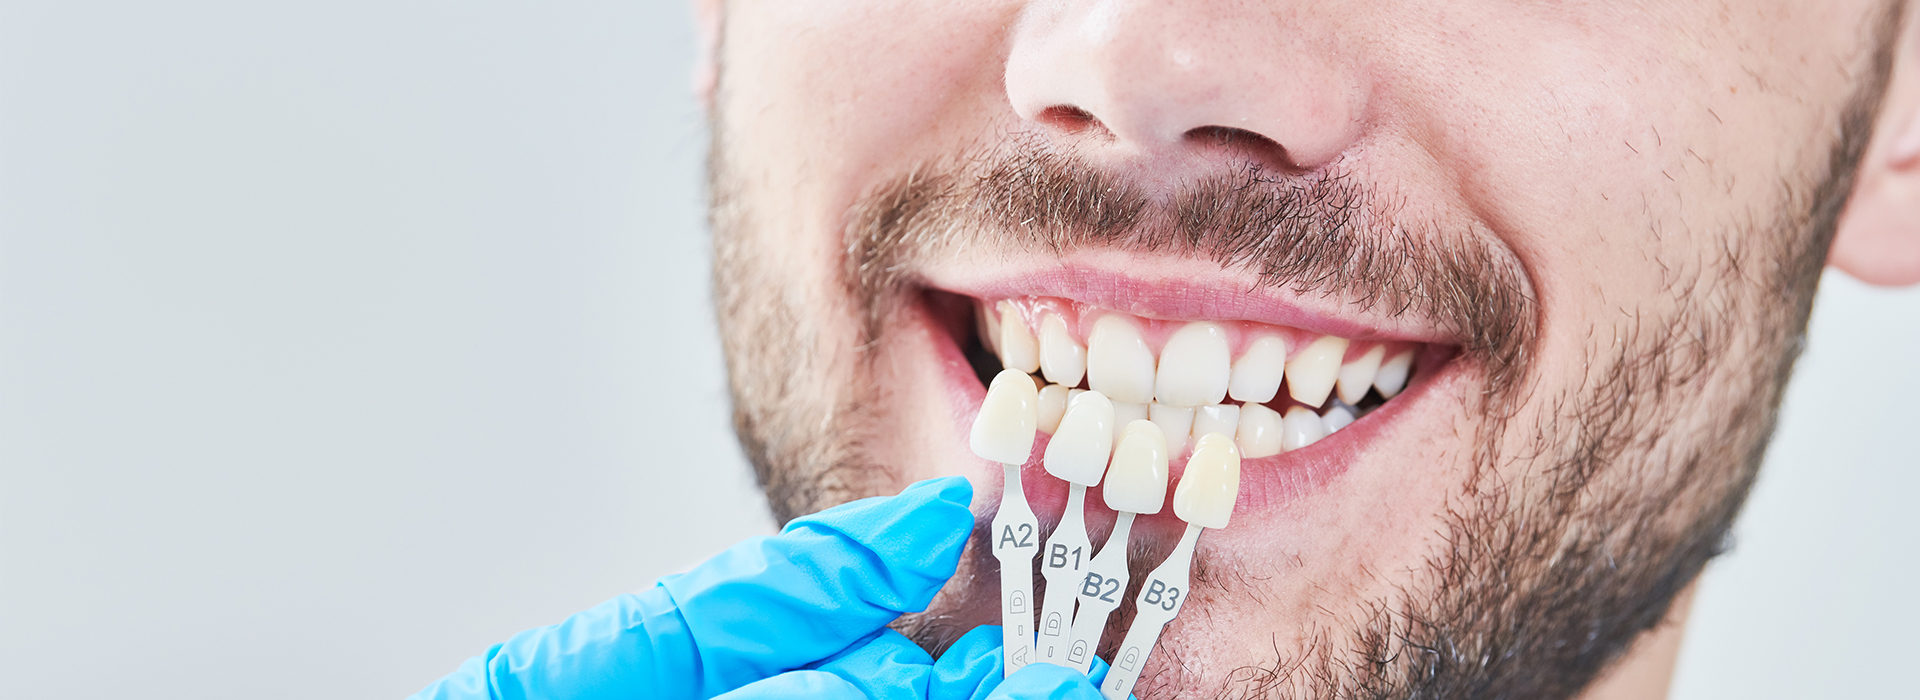 Advanced Dental Care | Digital Radiography, Implant Dentistry and Invisalign reg 